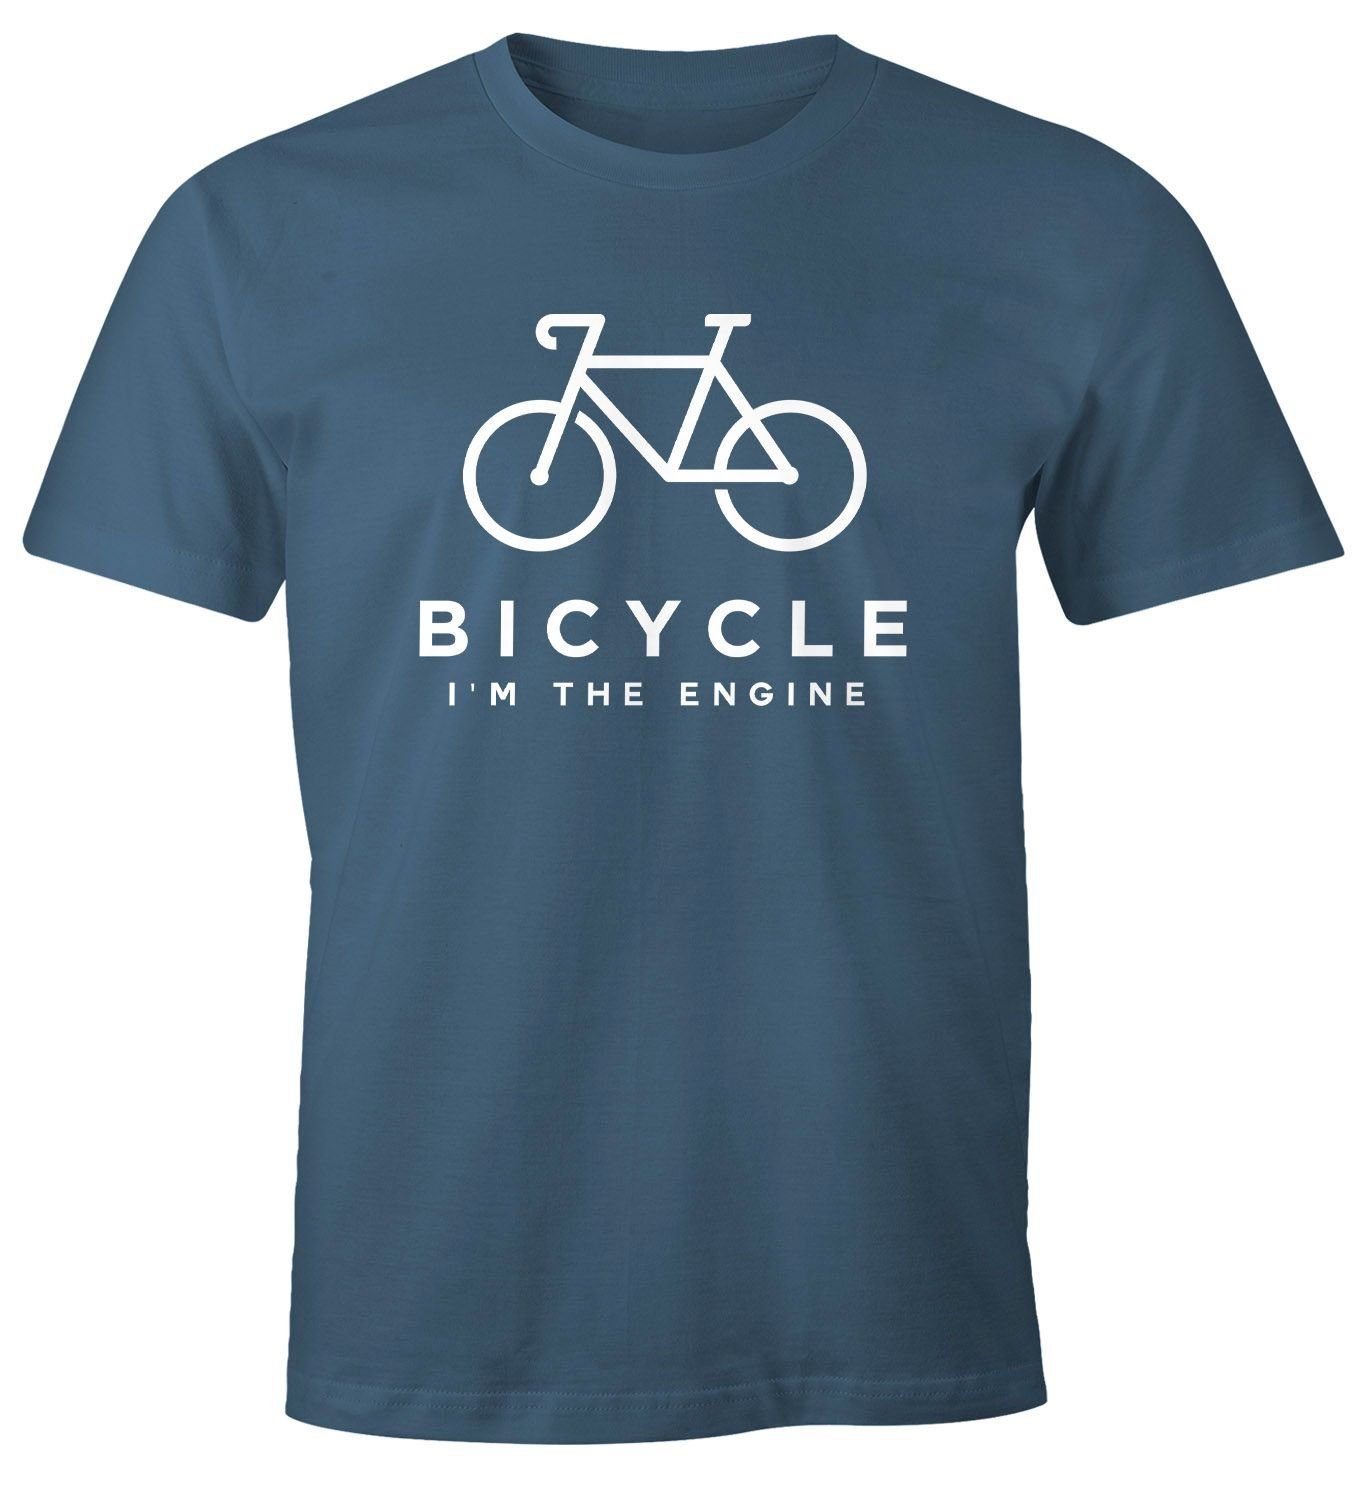 MoonWorks Print-Shirt Bike Rad the Fun-Shirt Print Bicycle I'm T-Shirt mit Fahrrad Engine lustig Herren Sprüche blau Moonworks® Spruch